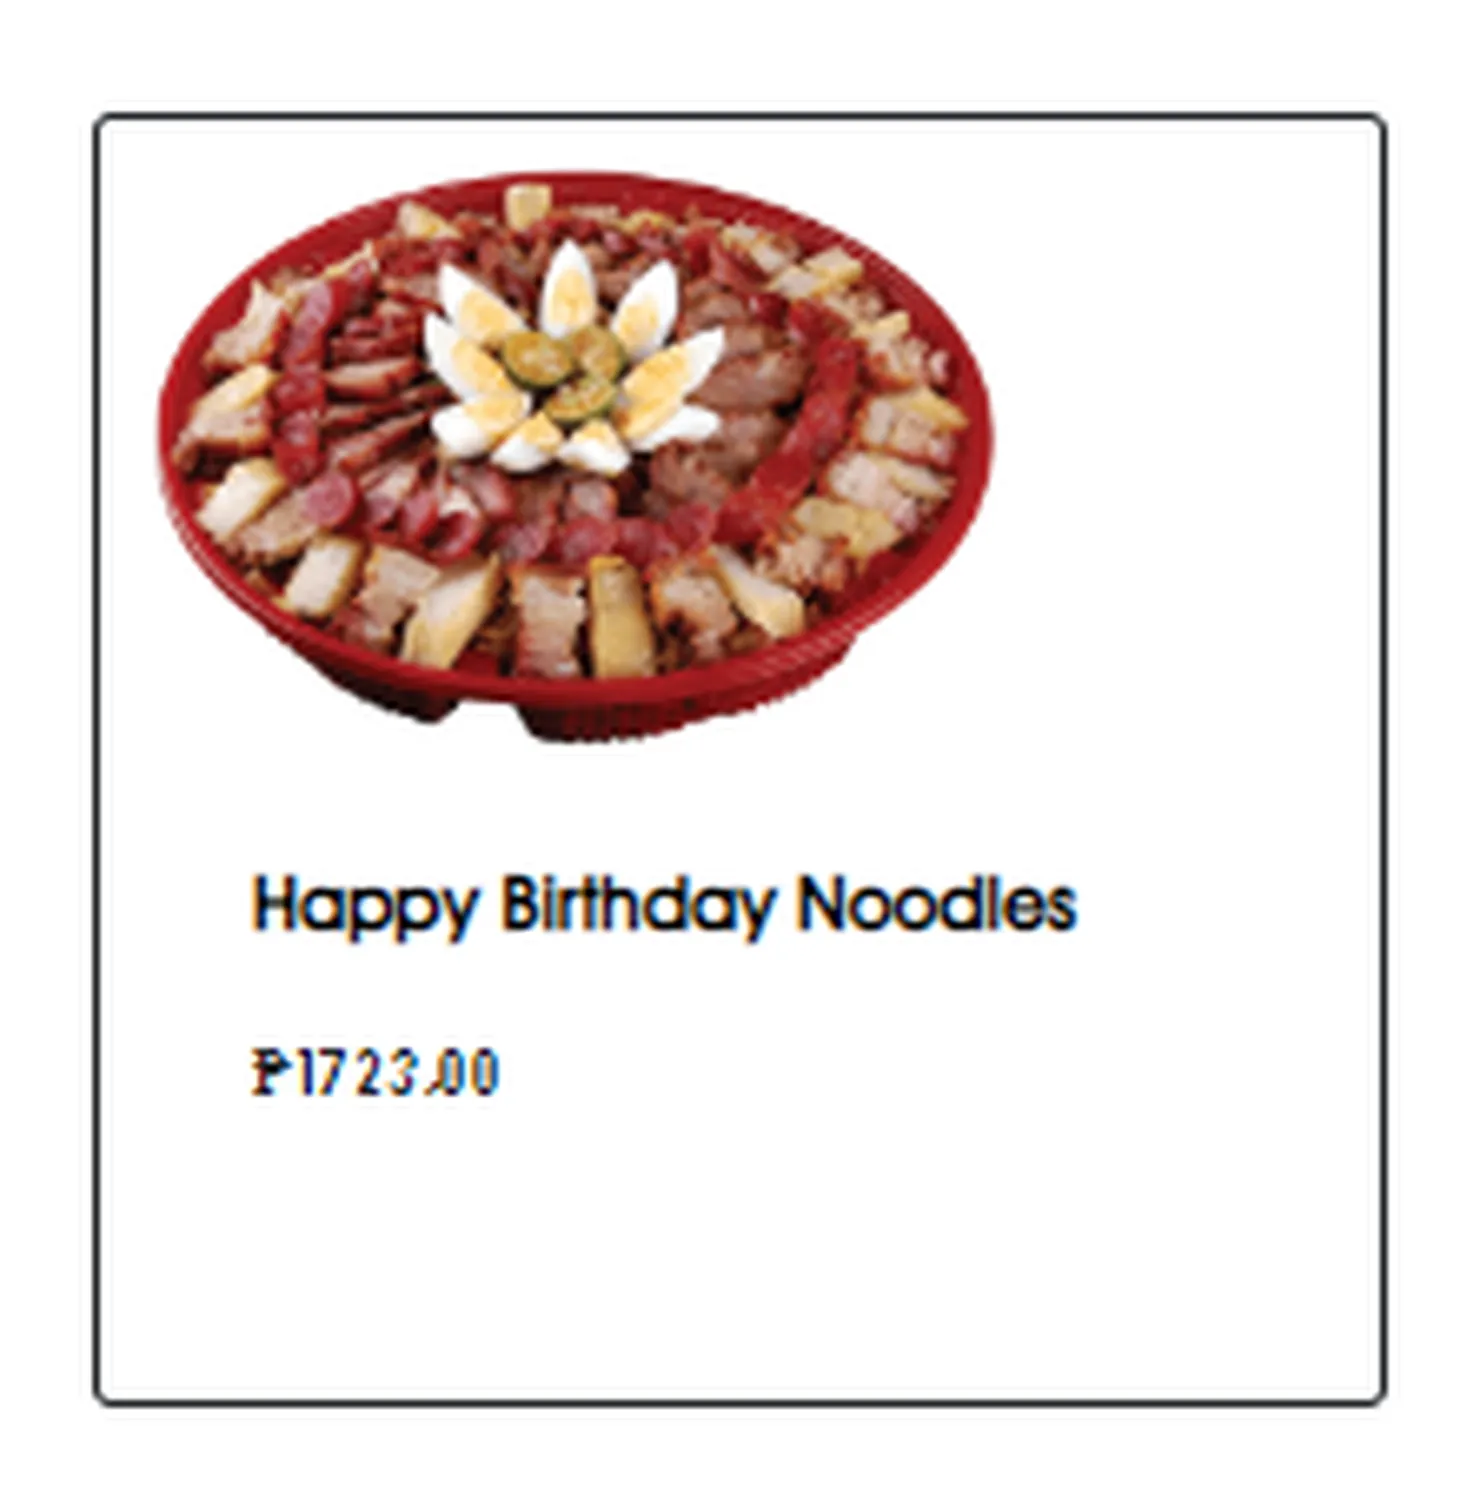 north park menu philippine happy birthday noodles